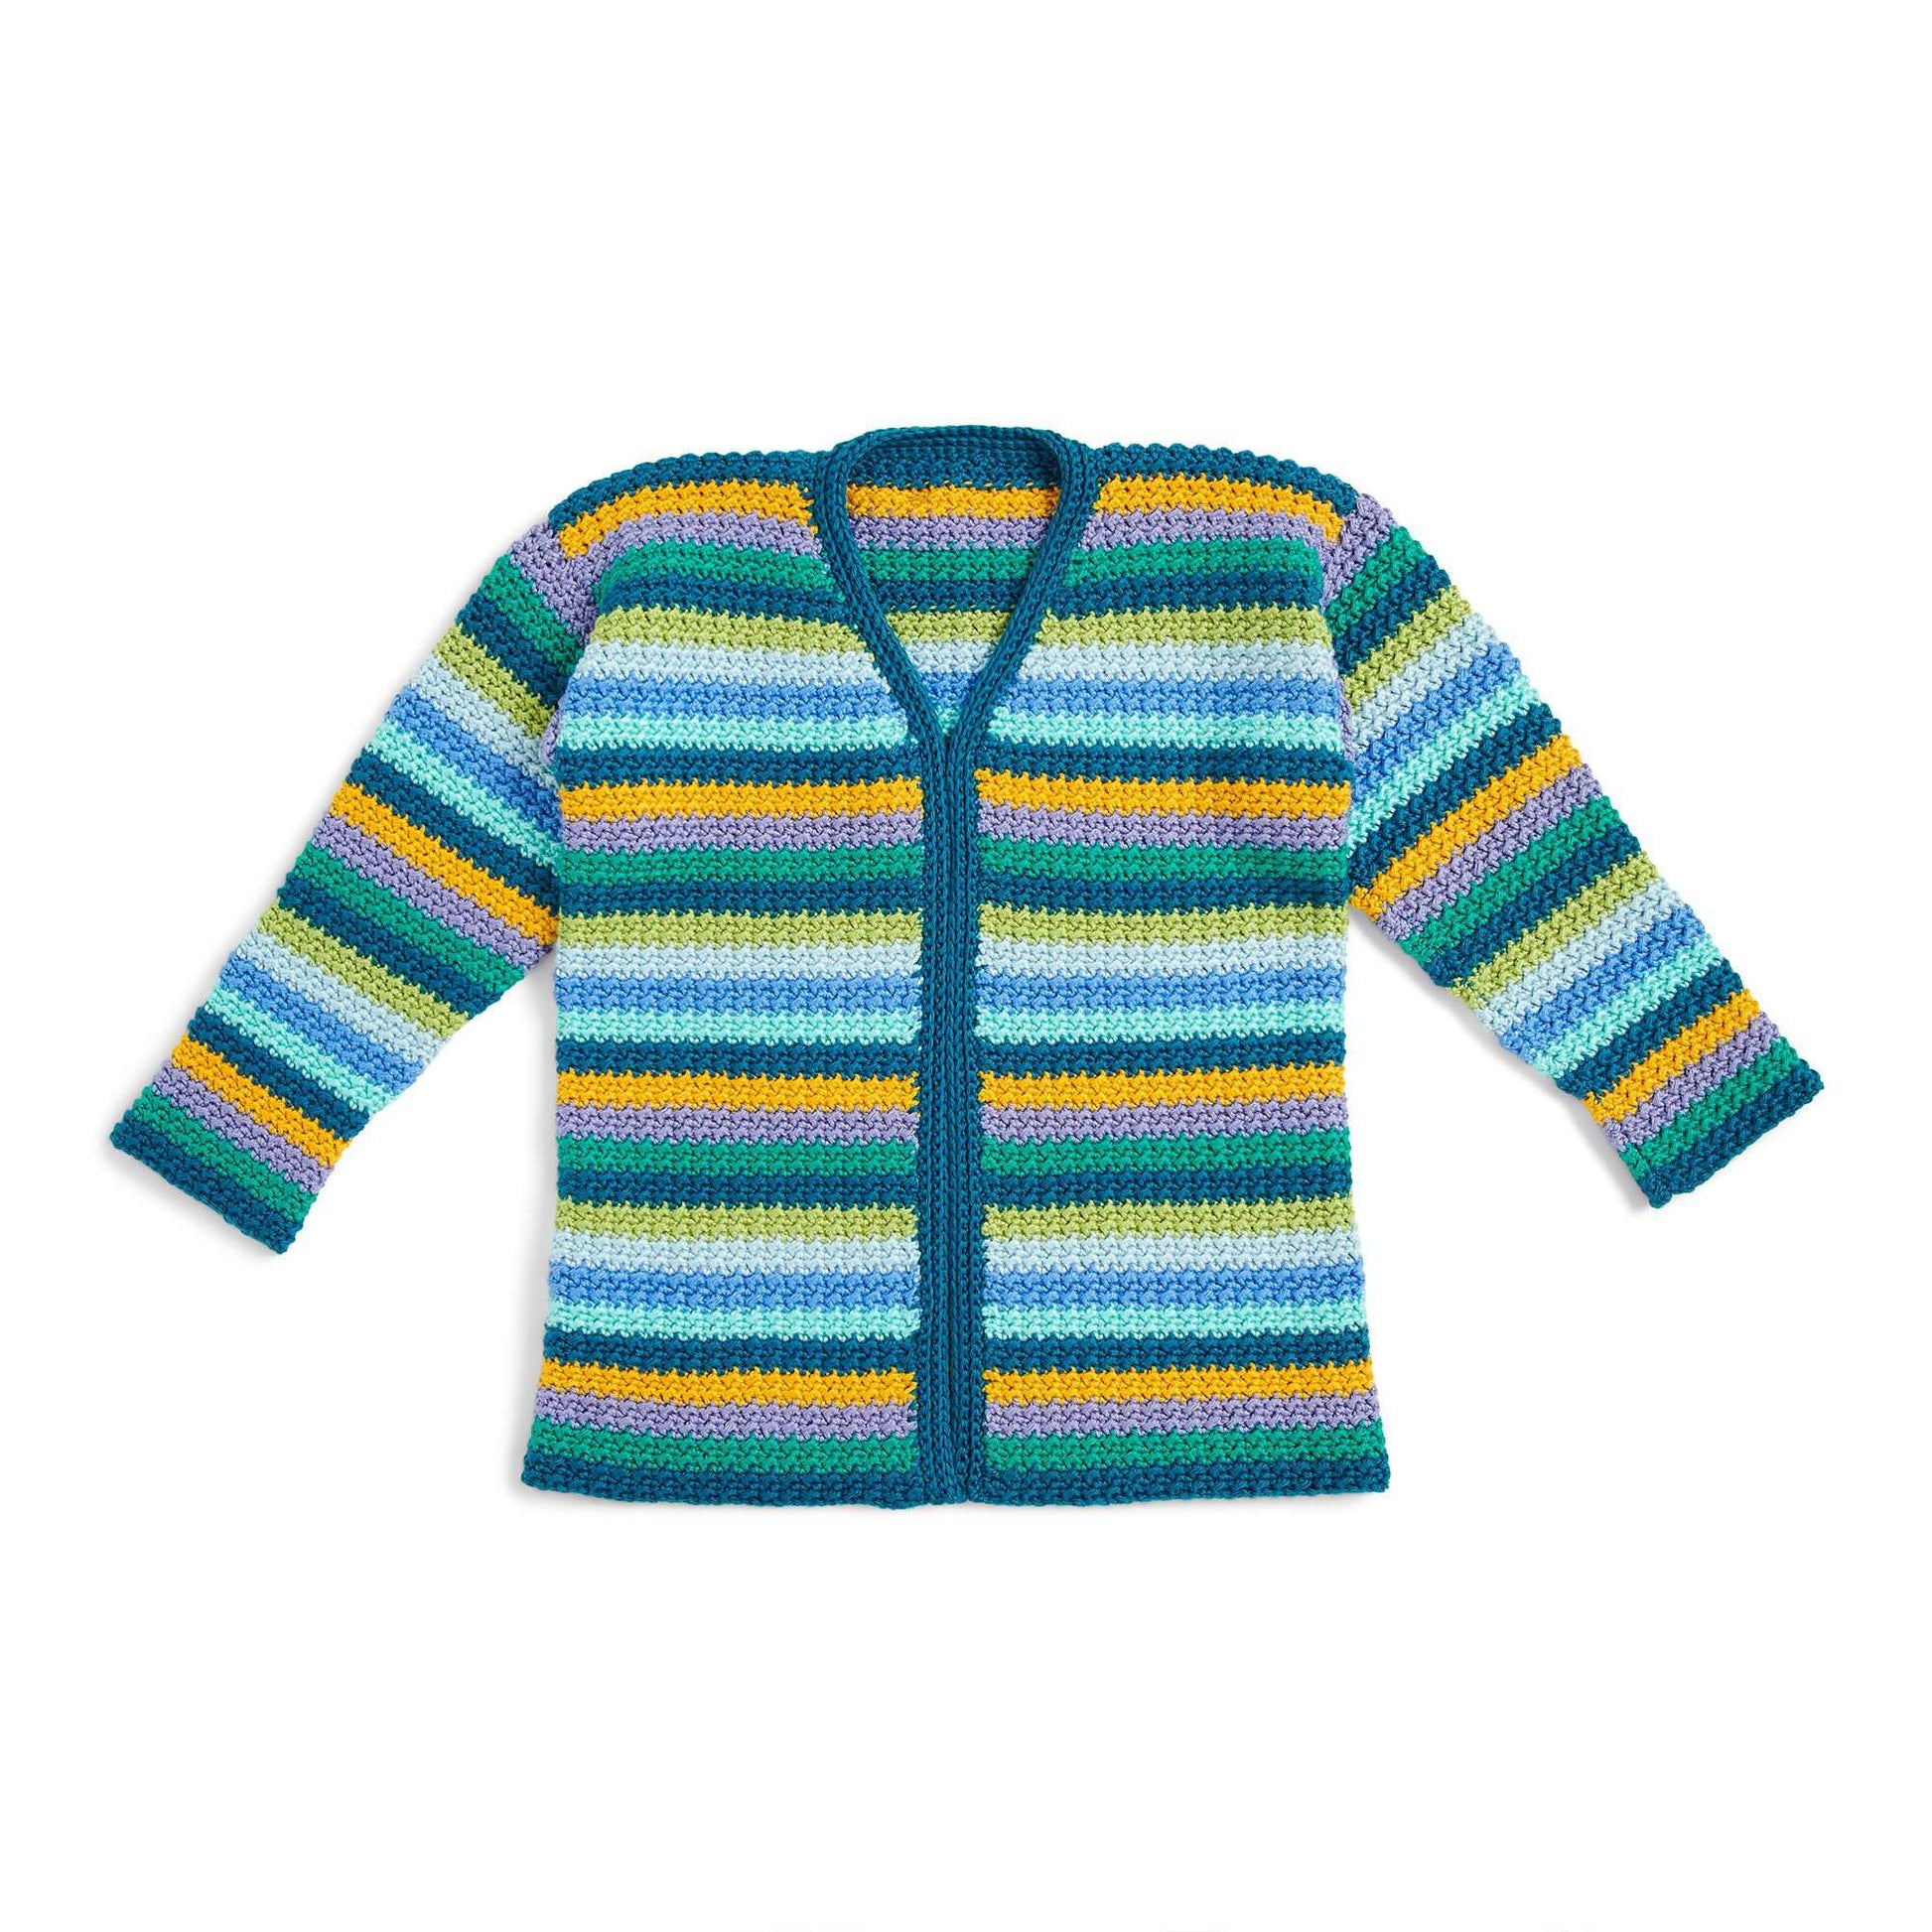 Free Caron Textured Stripes Crochet Cardigan Pattern